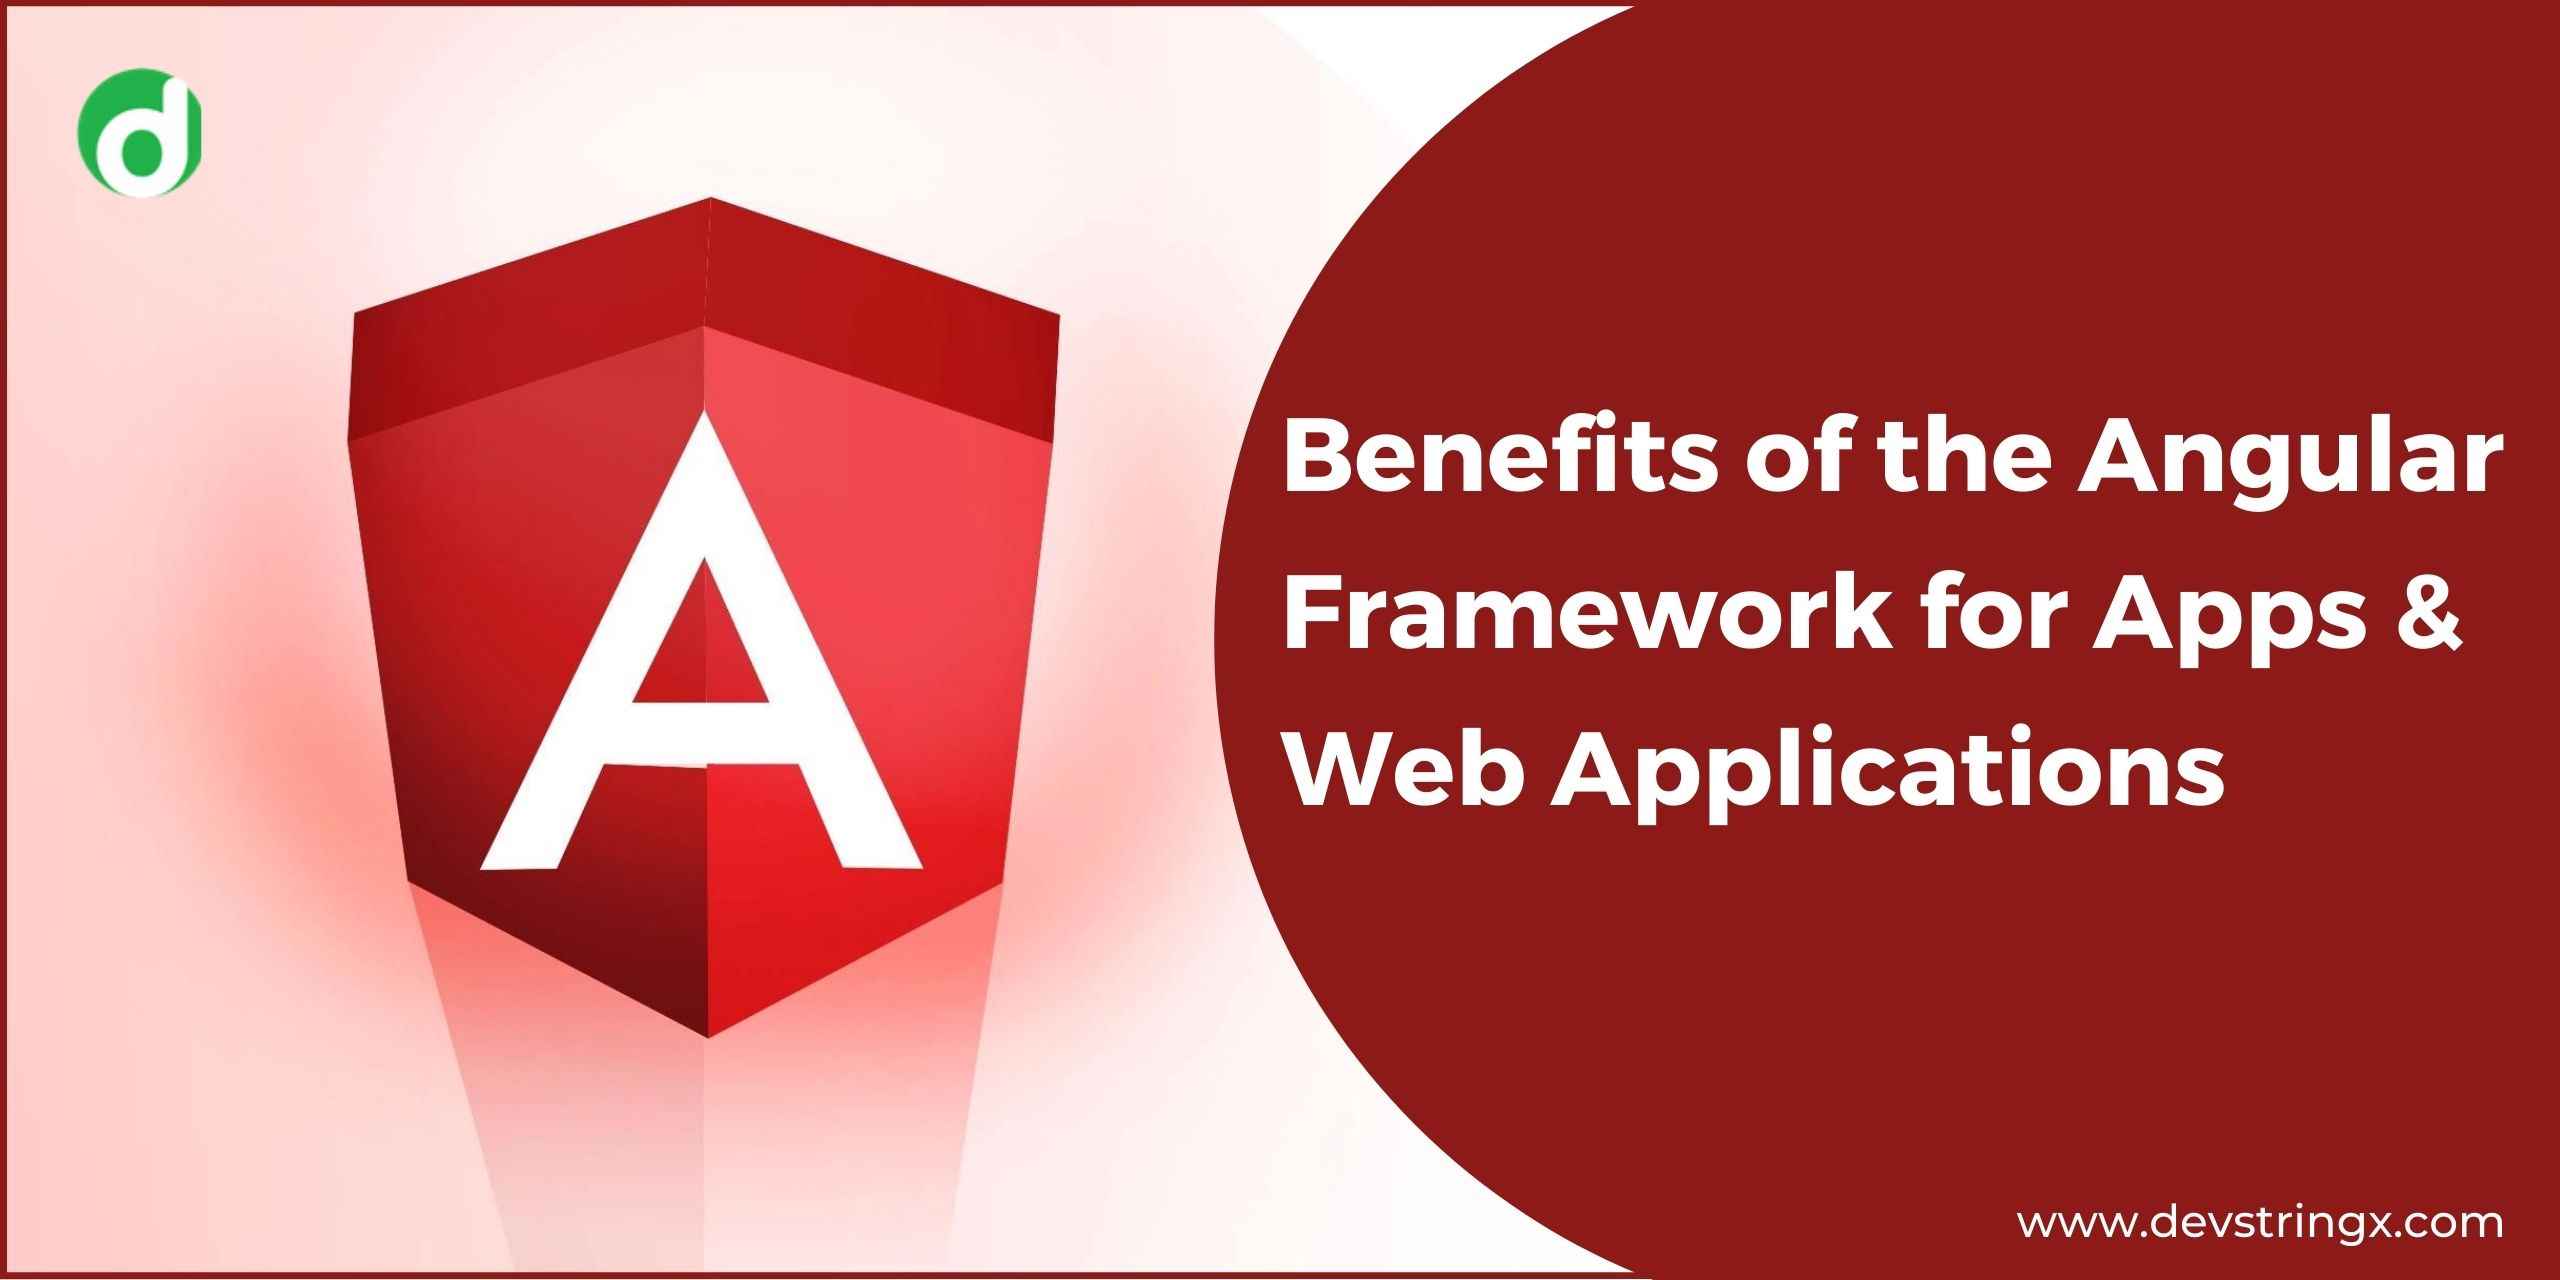 Feature image for Angular framework Benefits